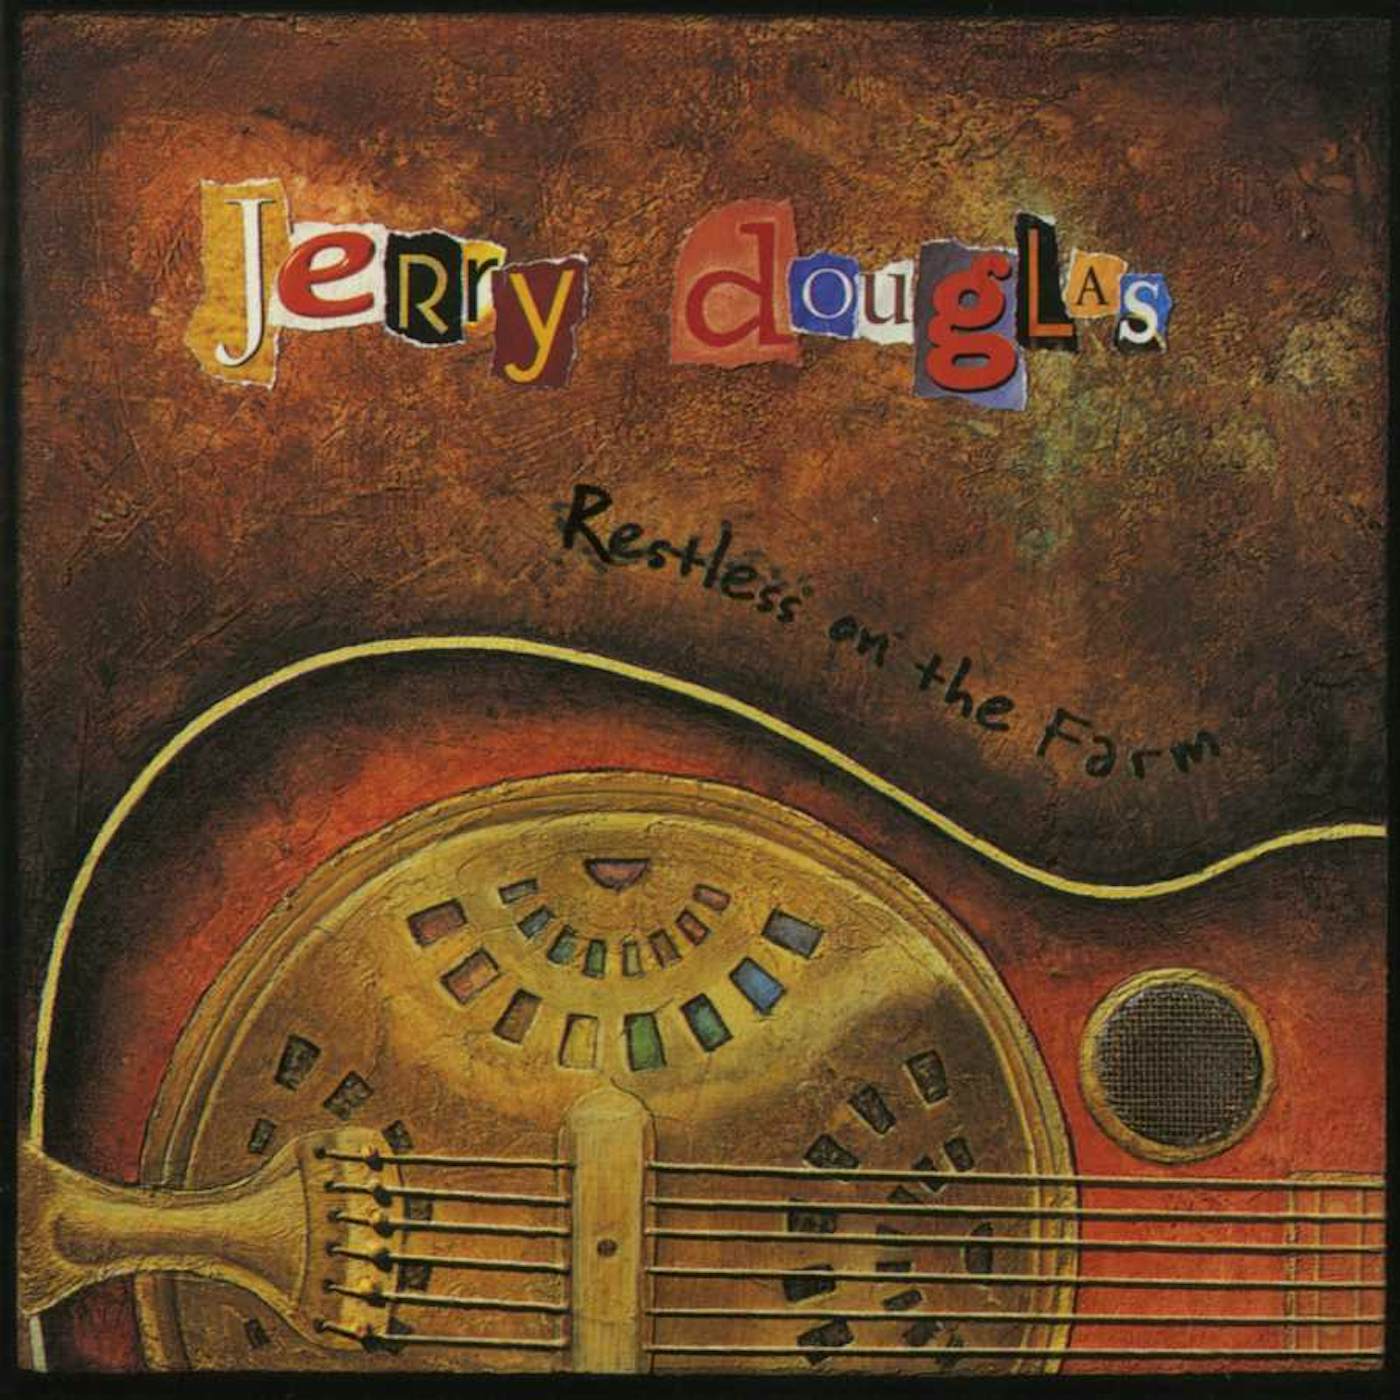 Jerry Douglas Restless On The Farm CD